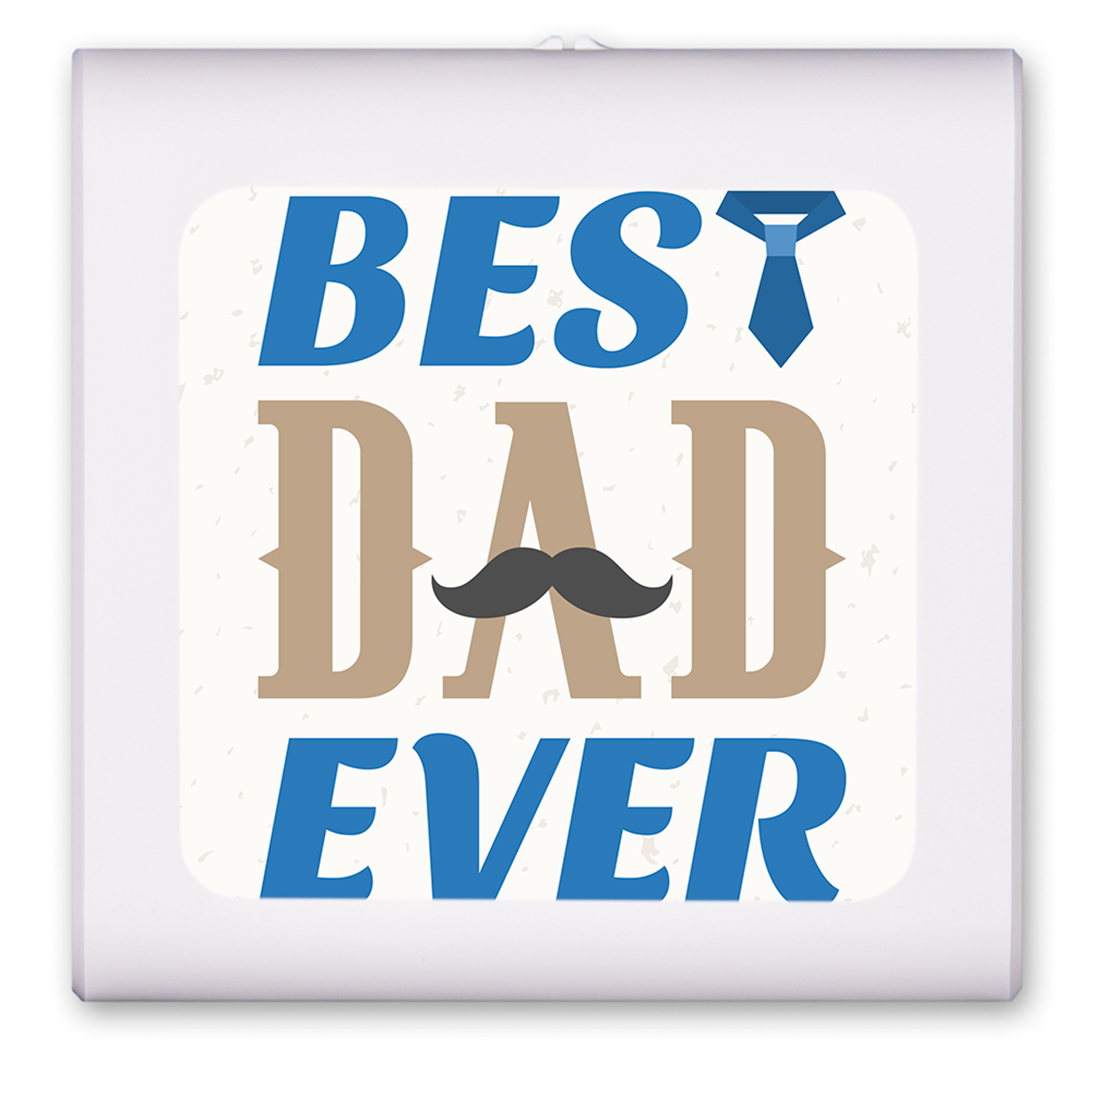 Best Dad Ever - #8675